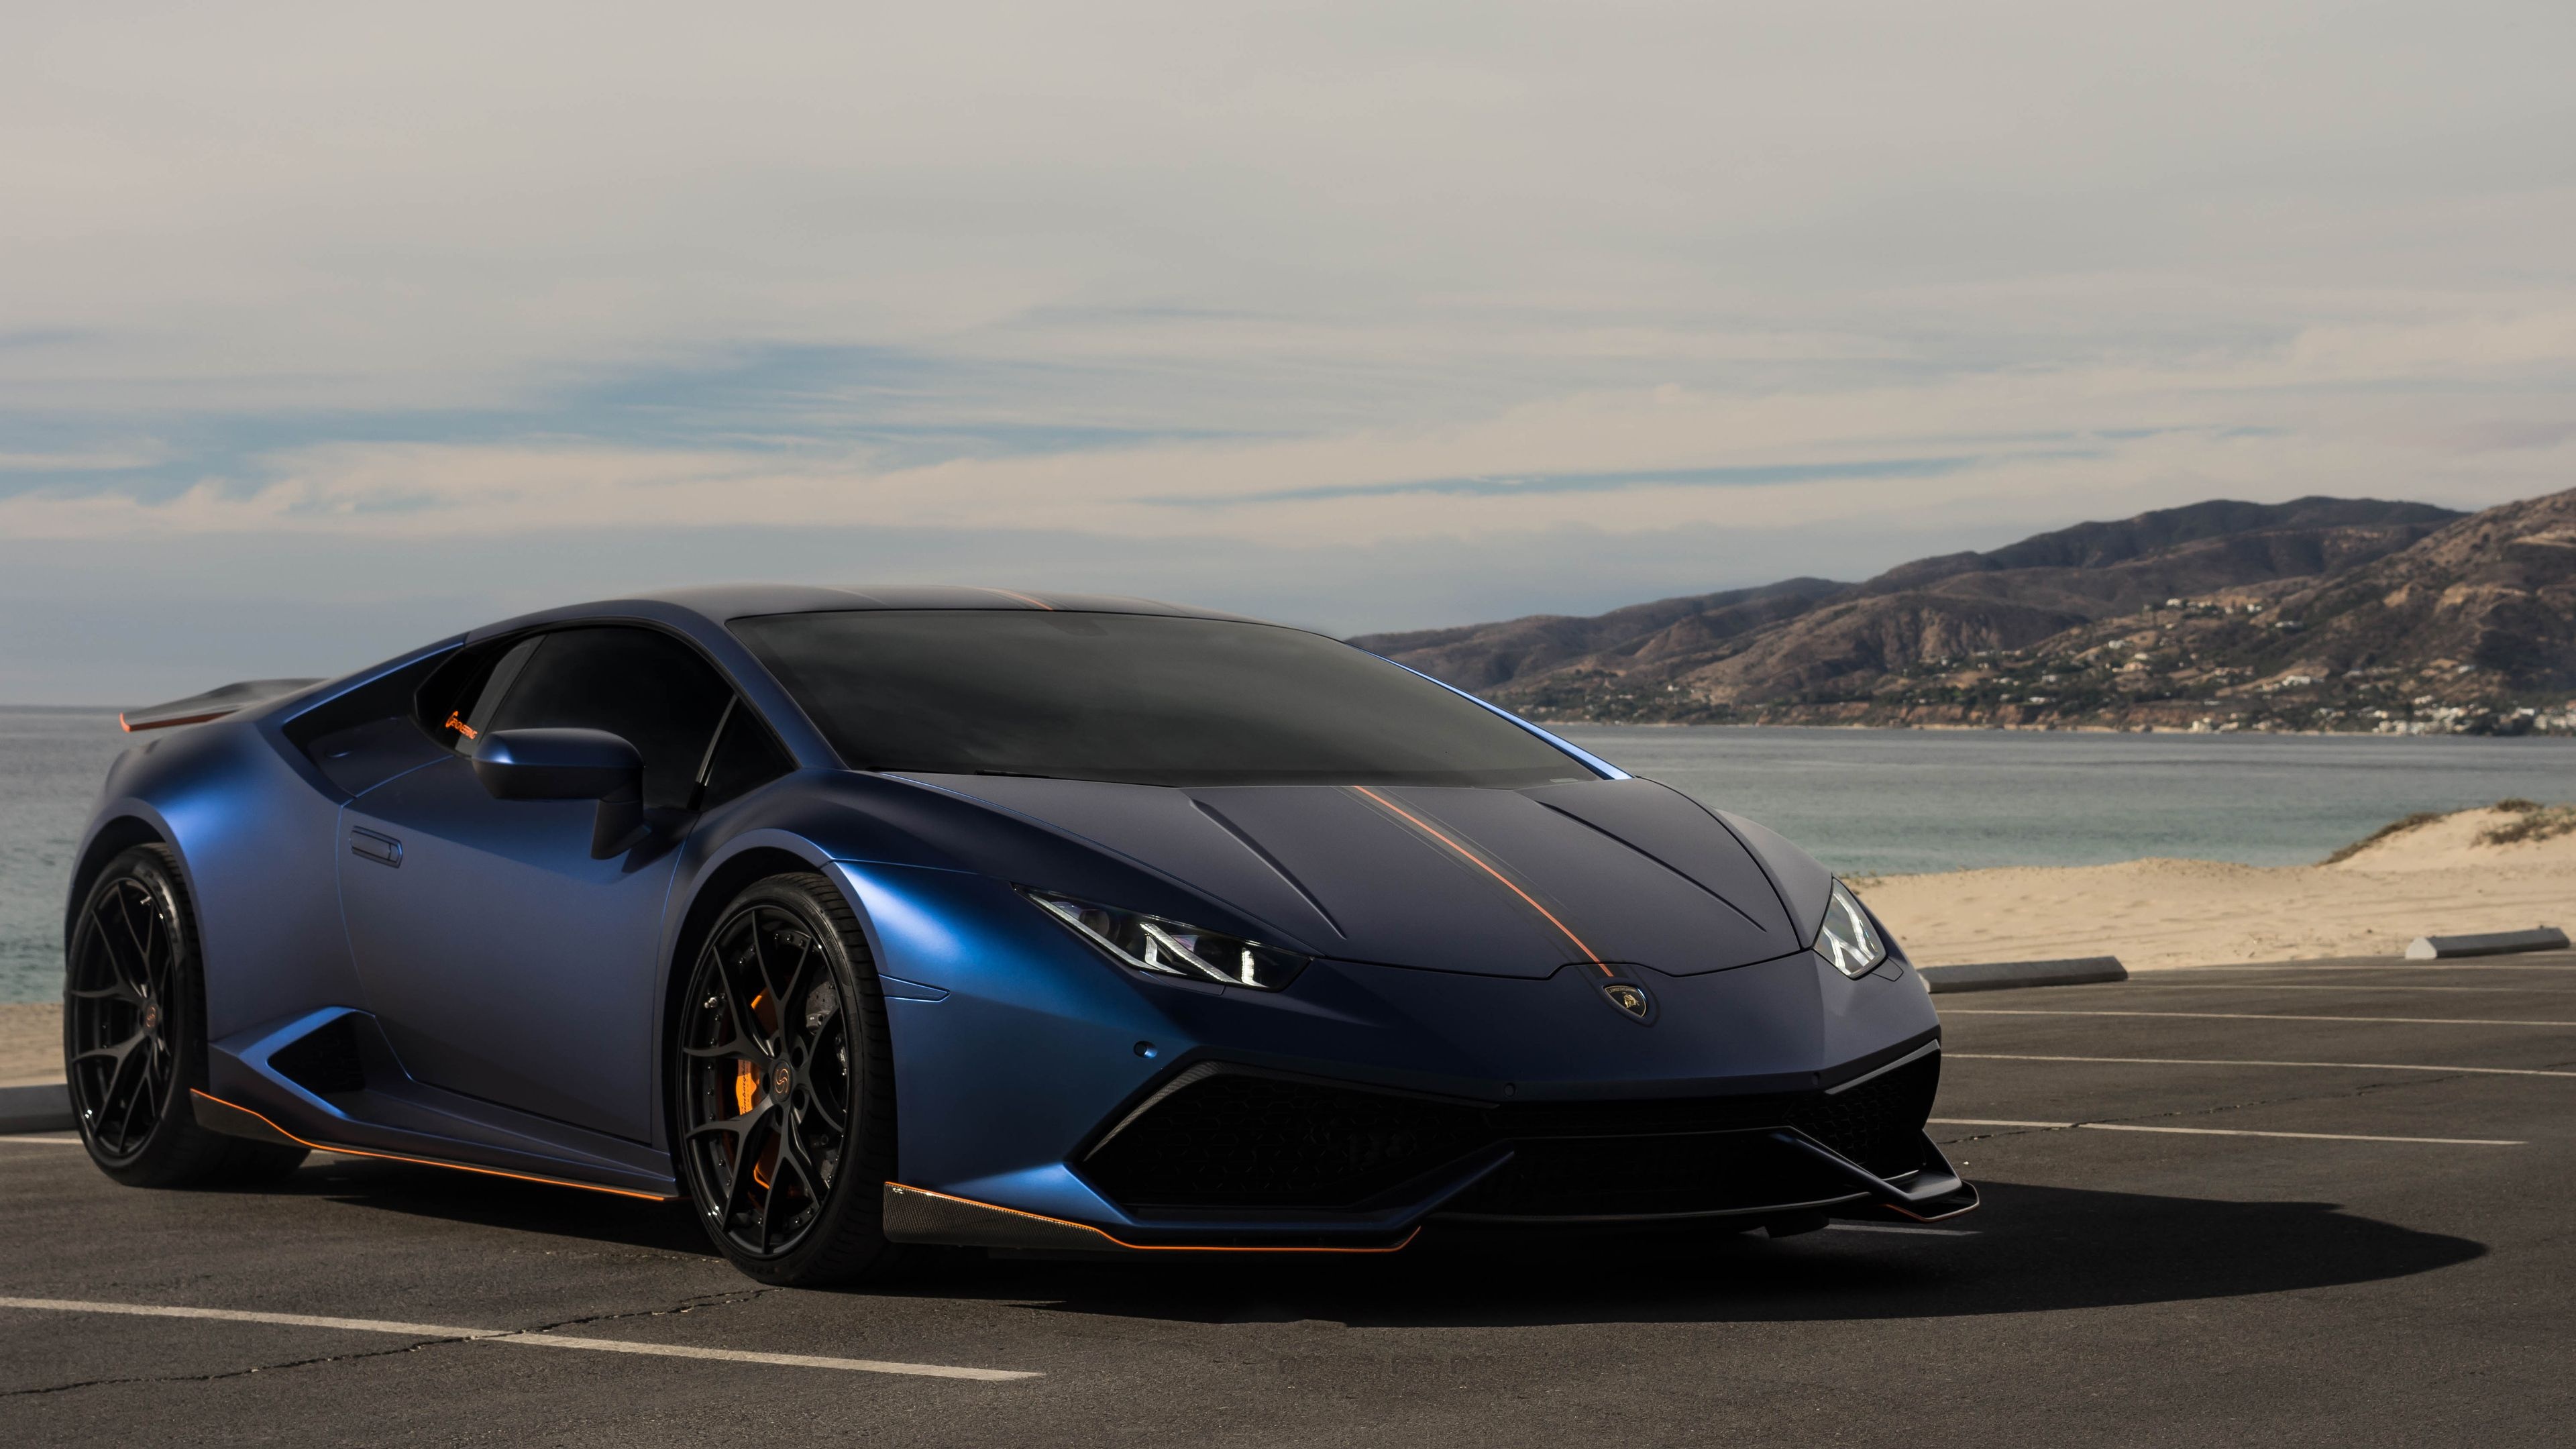 Lamborghini Huracan, 4K wallpapers, Exquisite details, Car enthusiasts' delight, 3840x2160 4K Desktop